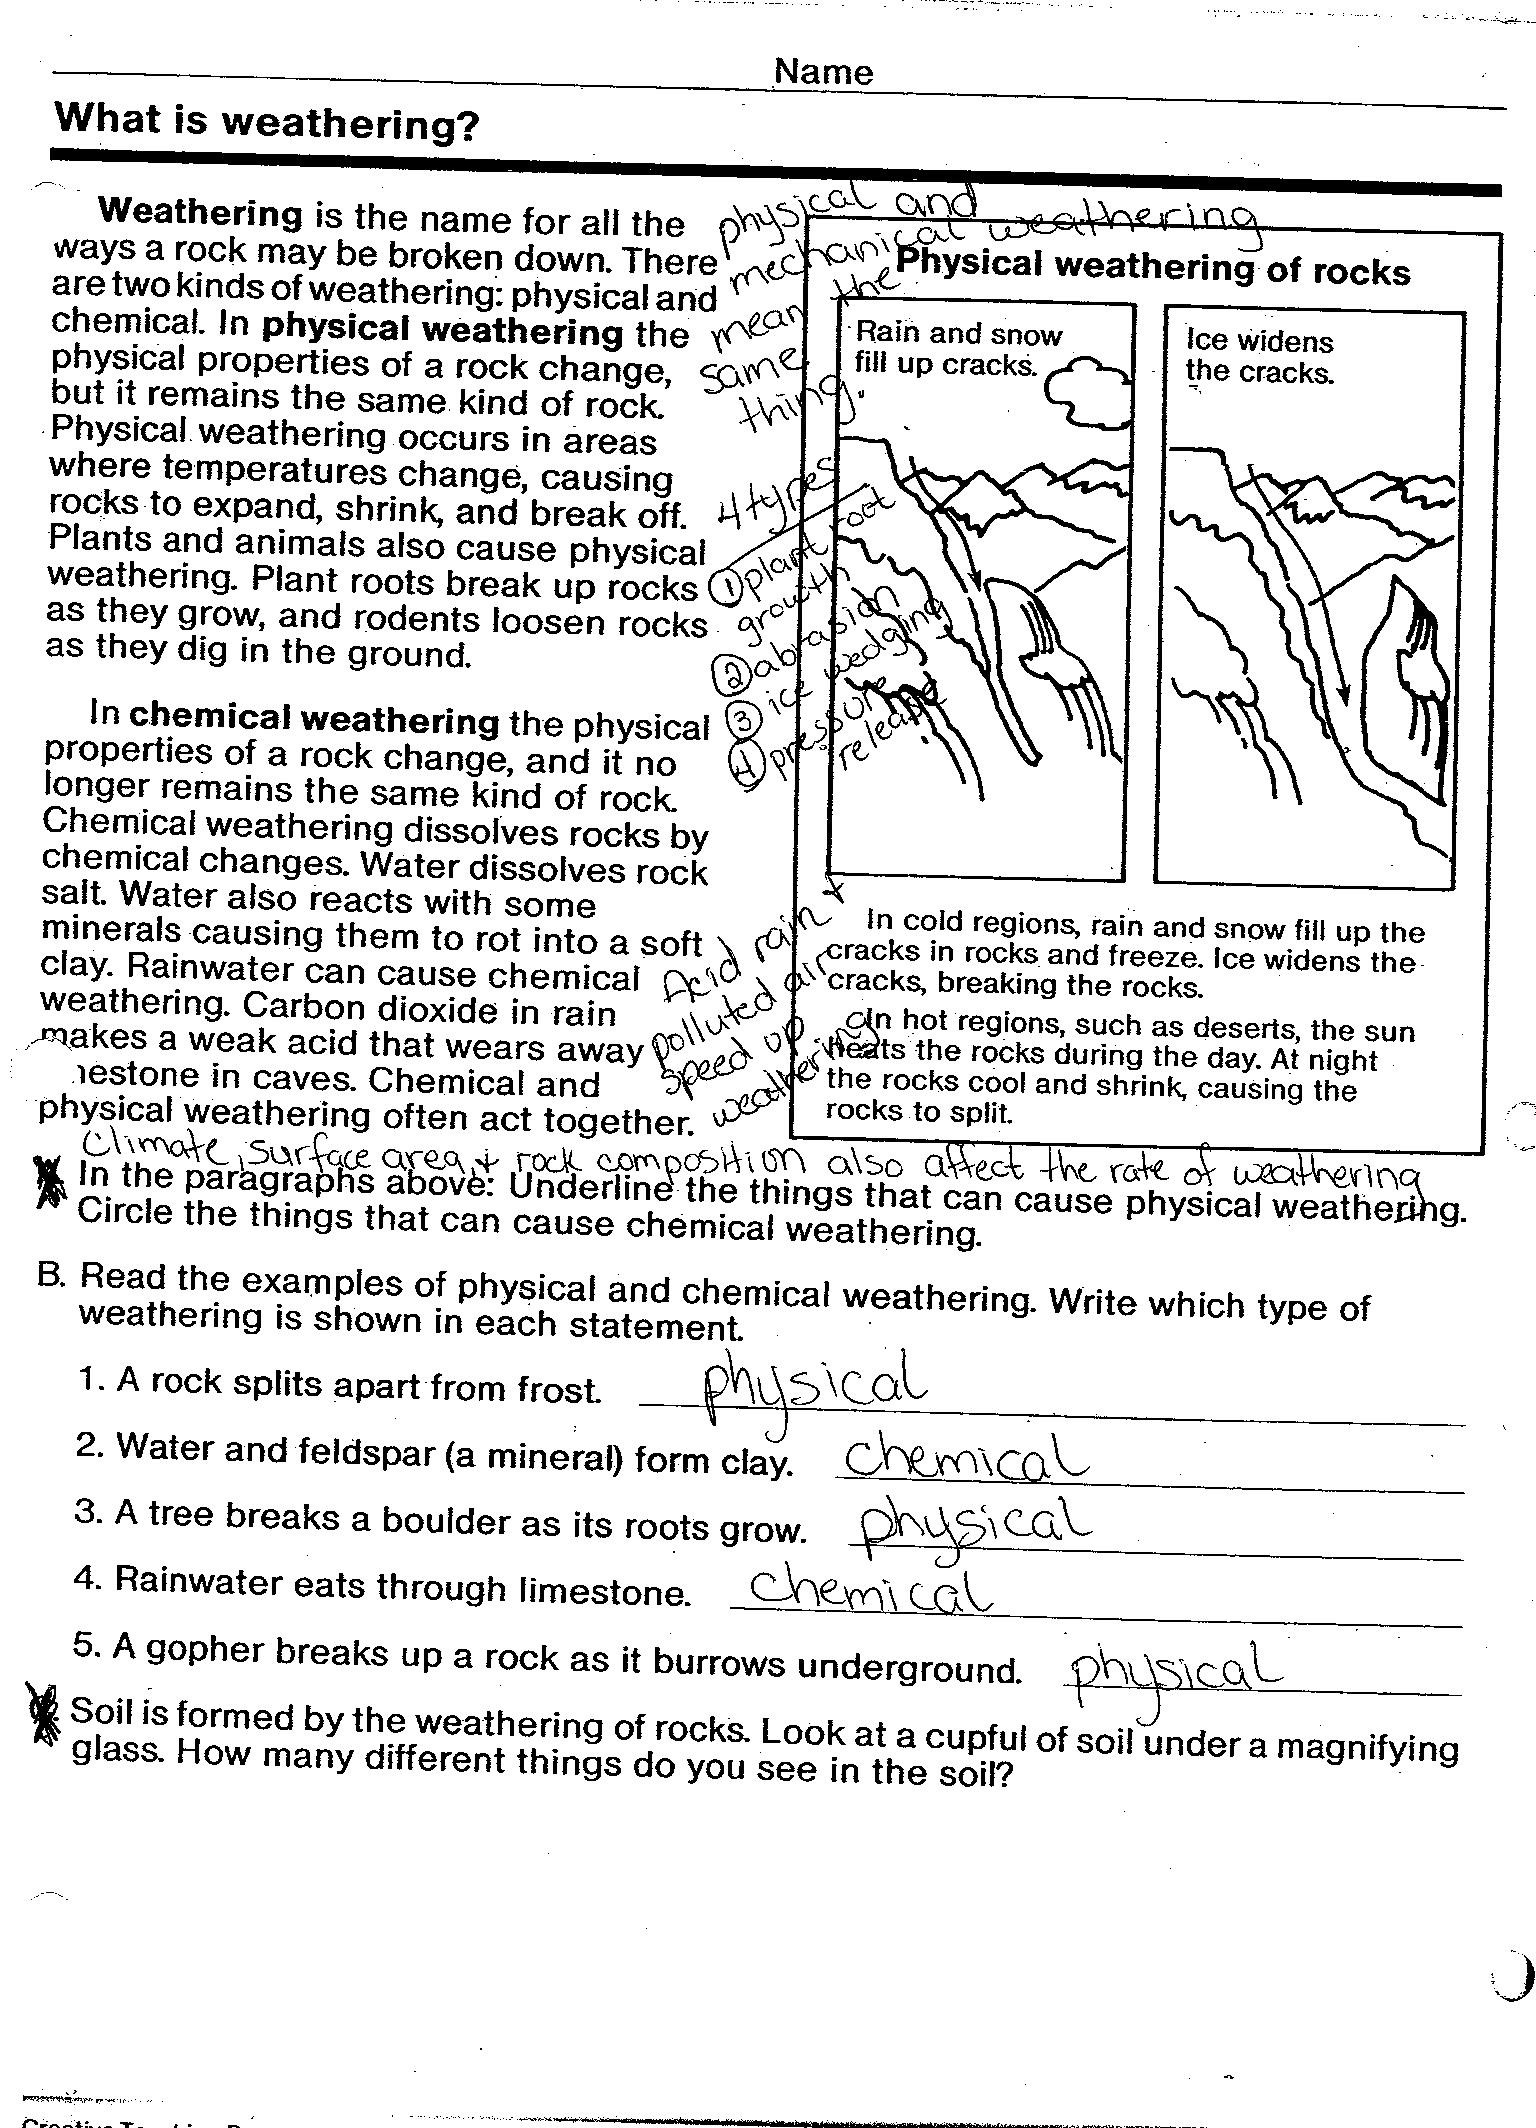 Weathering Erosion and Deposition Worksheet 28 [ Weathering Erosion and Deposition Worksheet